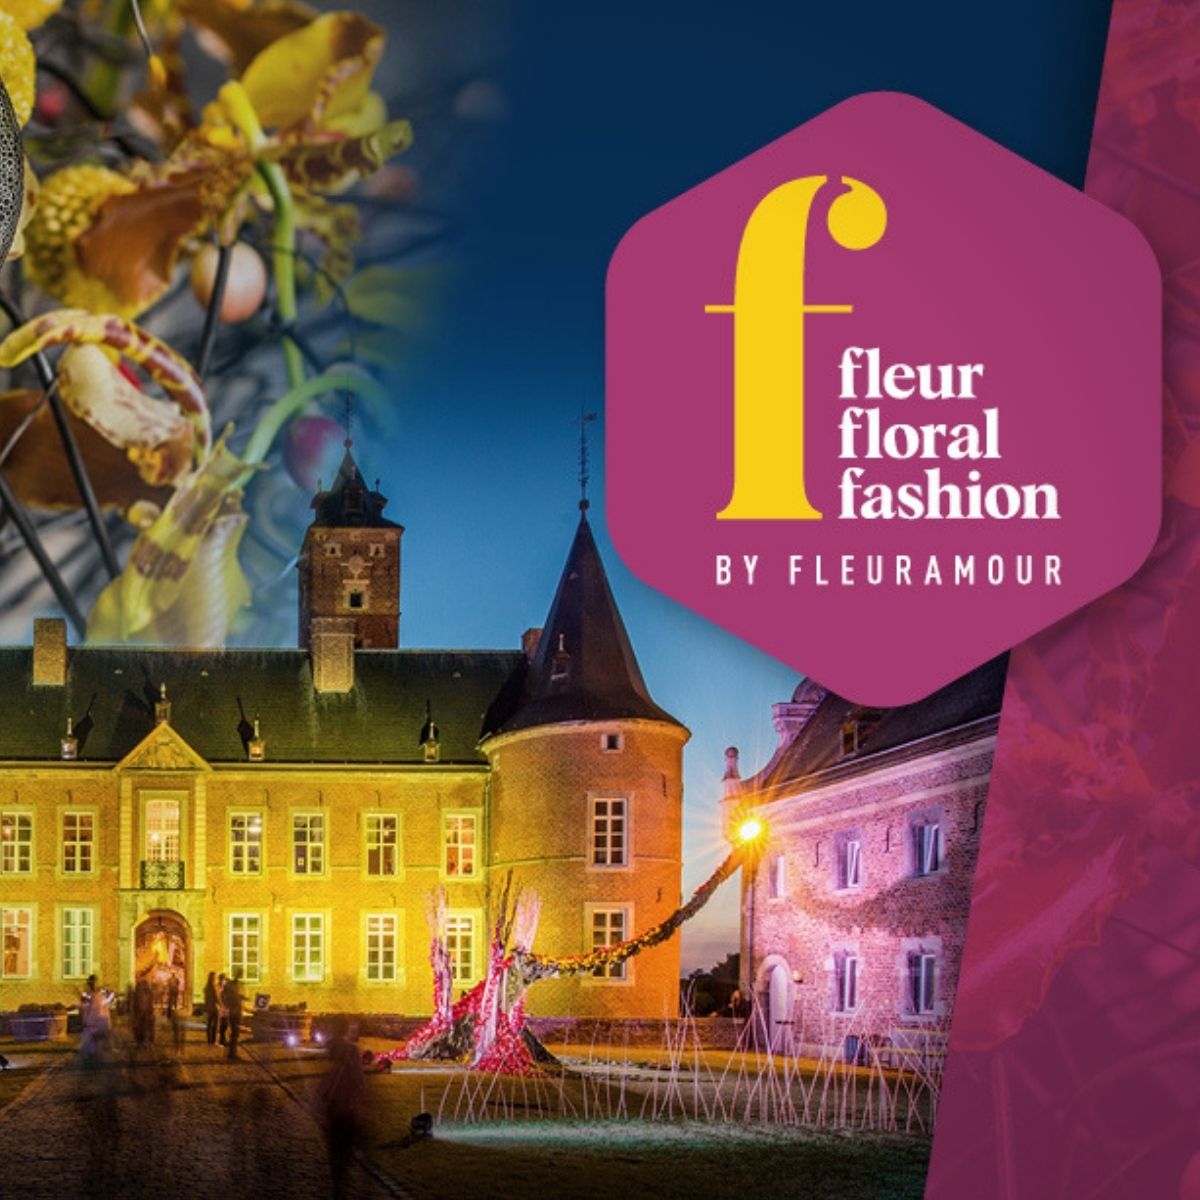 fleur-floral-fashion-by-fleuramour-in-alden-biesen-castle-2-featured